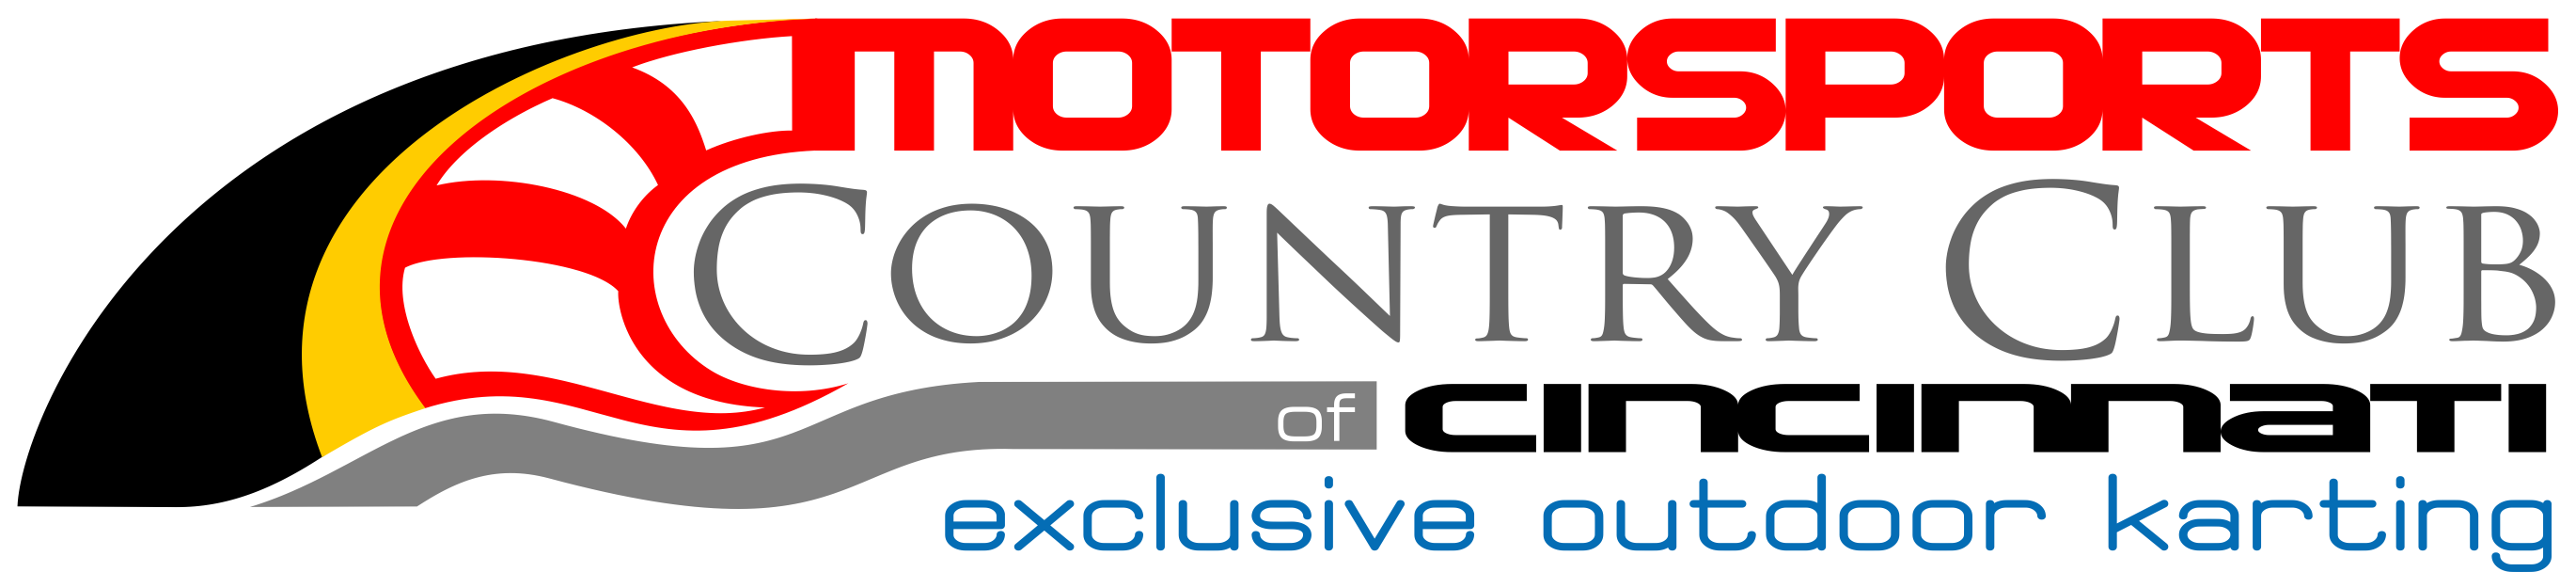 Motorsports Country Club of Cincinnati